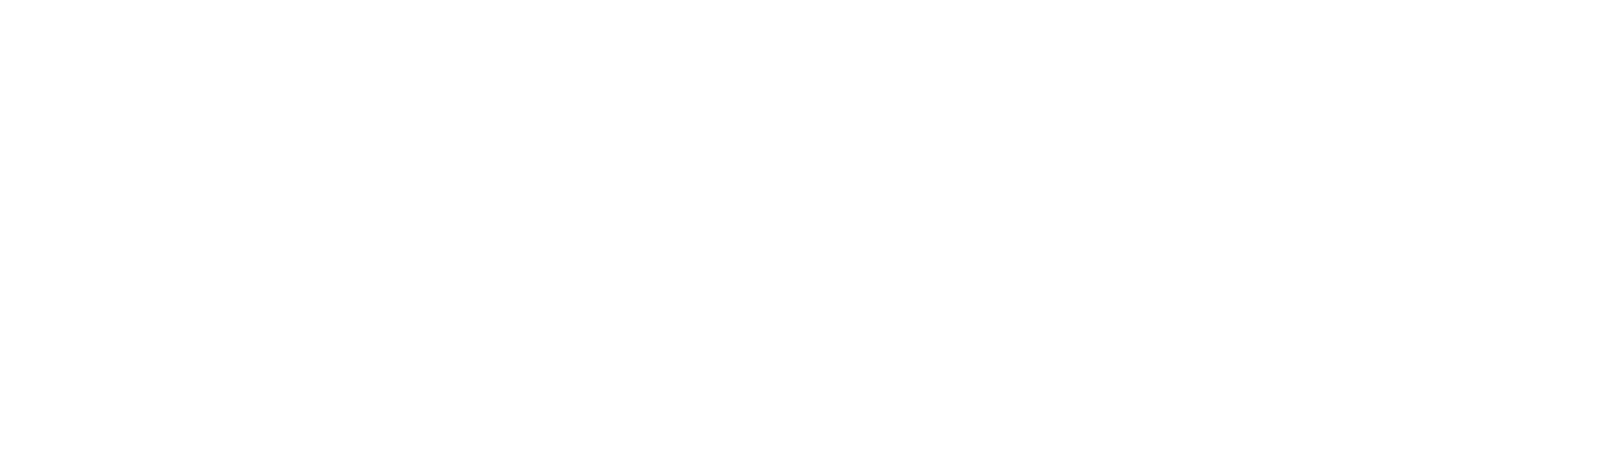 Logisoft